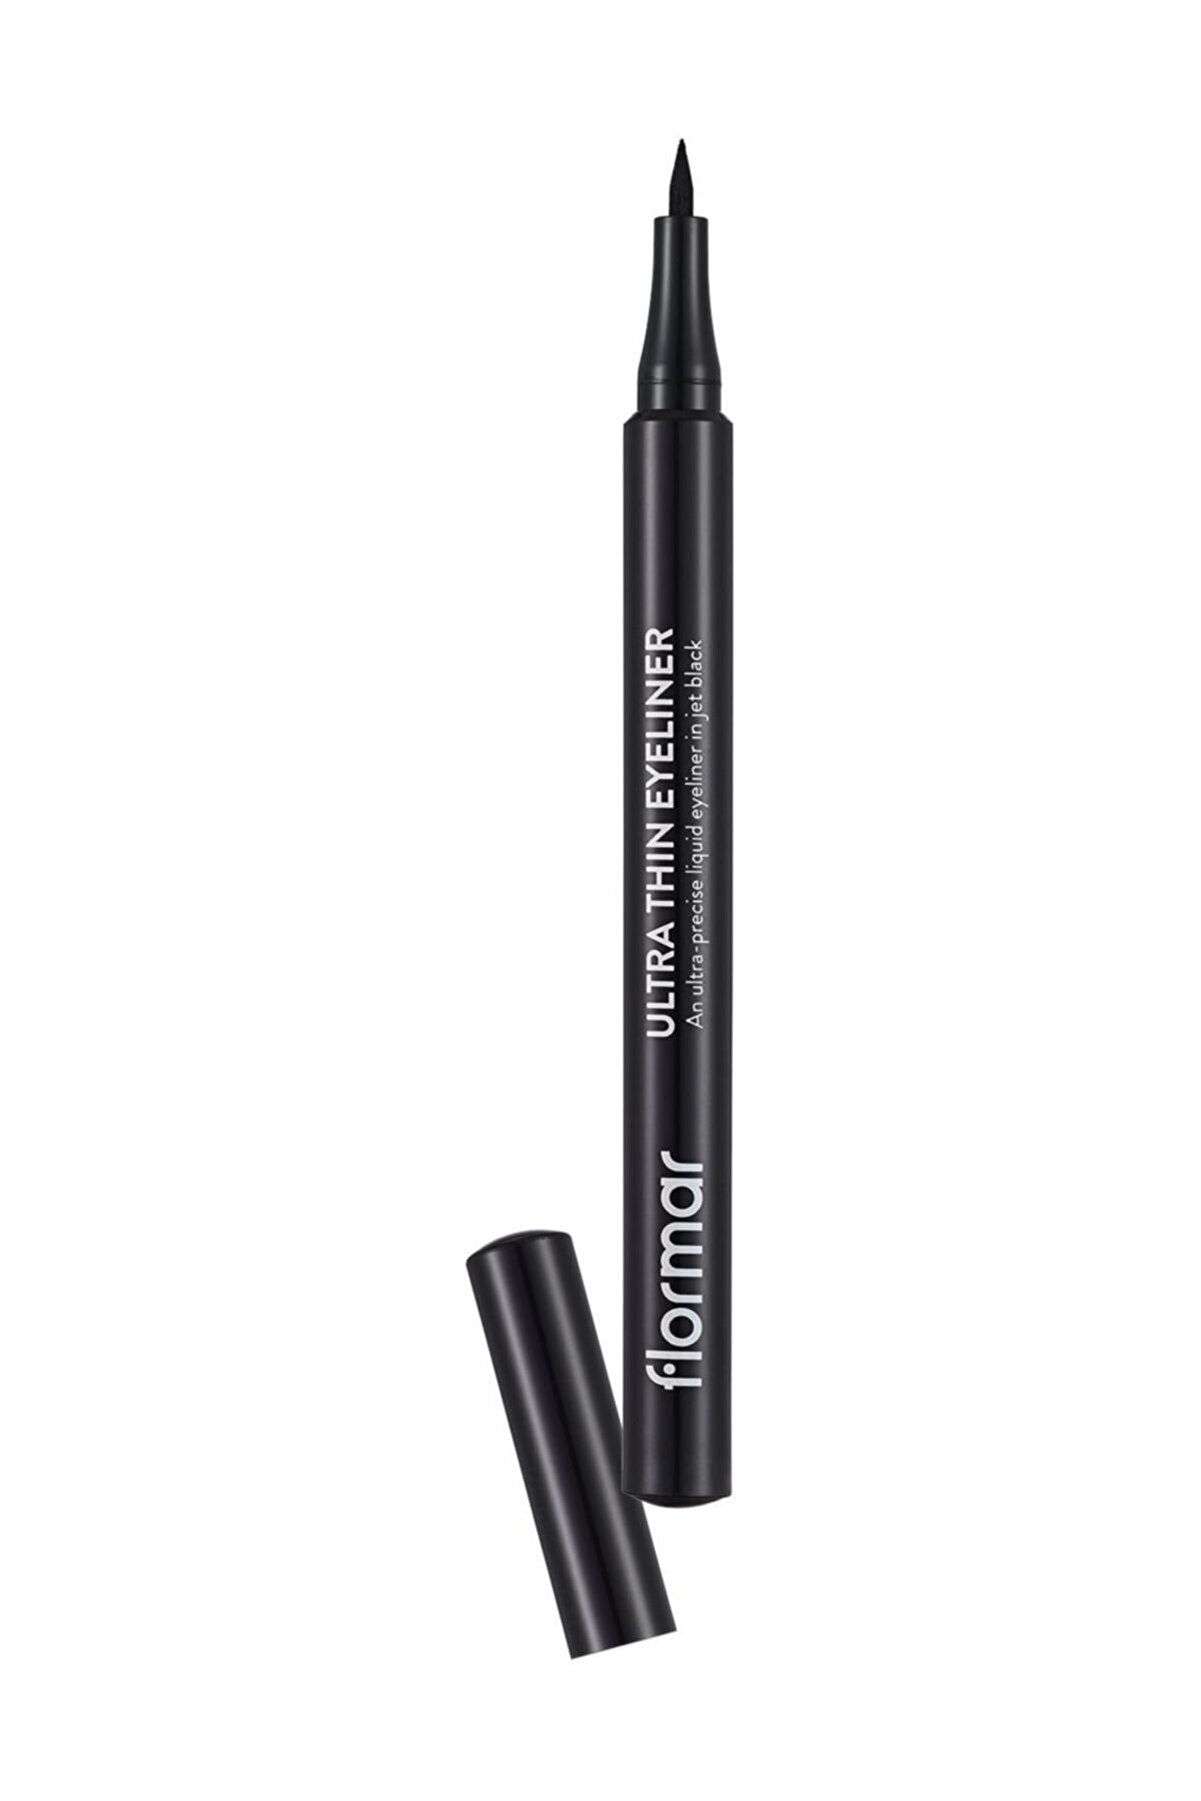 Flormar Ultra İnce Uçlu Likit Kalem Eyeliner (Siyah) - Ultra Thin Eyeliner - 001 Black - 8690604478491